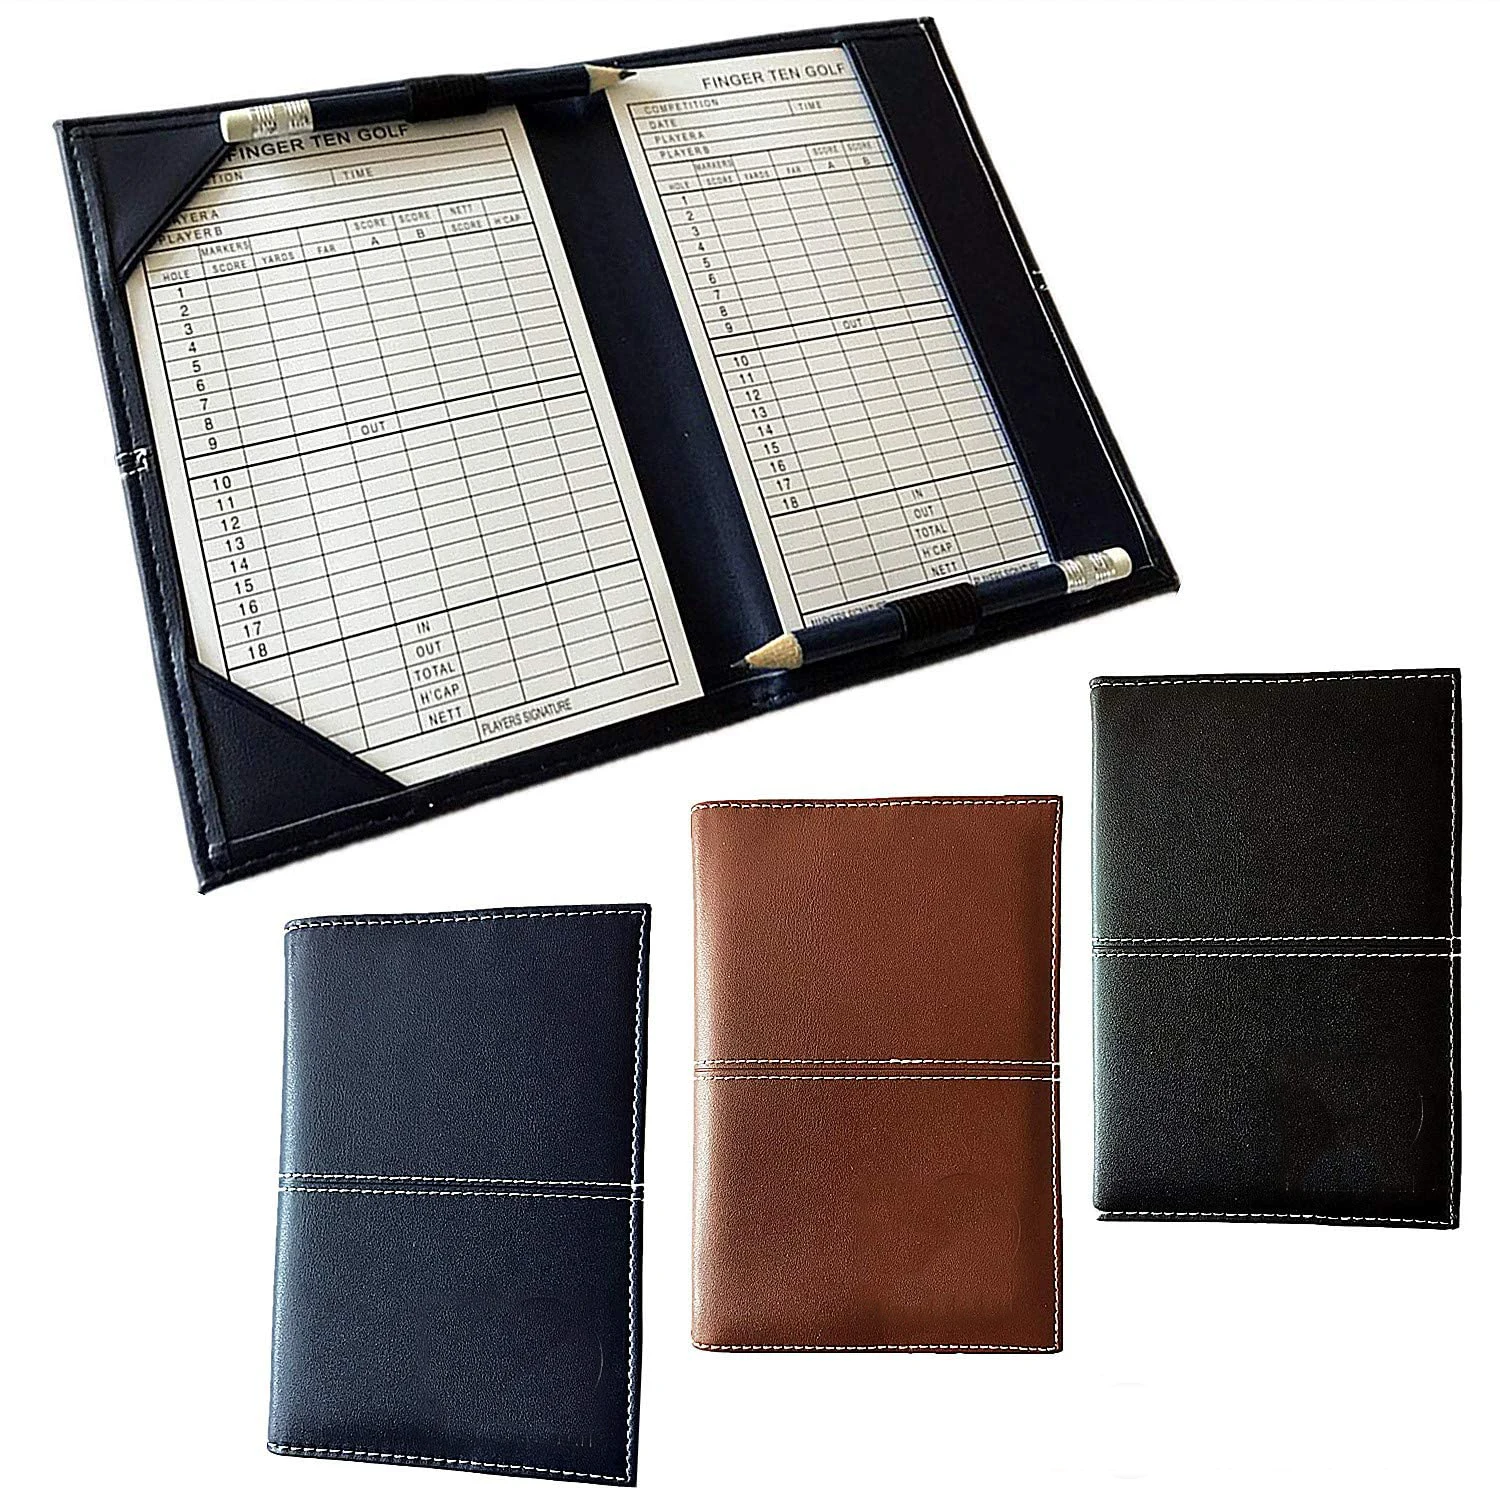 

YY Golf Scorecard Holder Golf Pencil Yardage Book Cover Golf Club Log Promotion Gifts Accessories, Brown black(can custom)